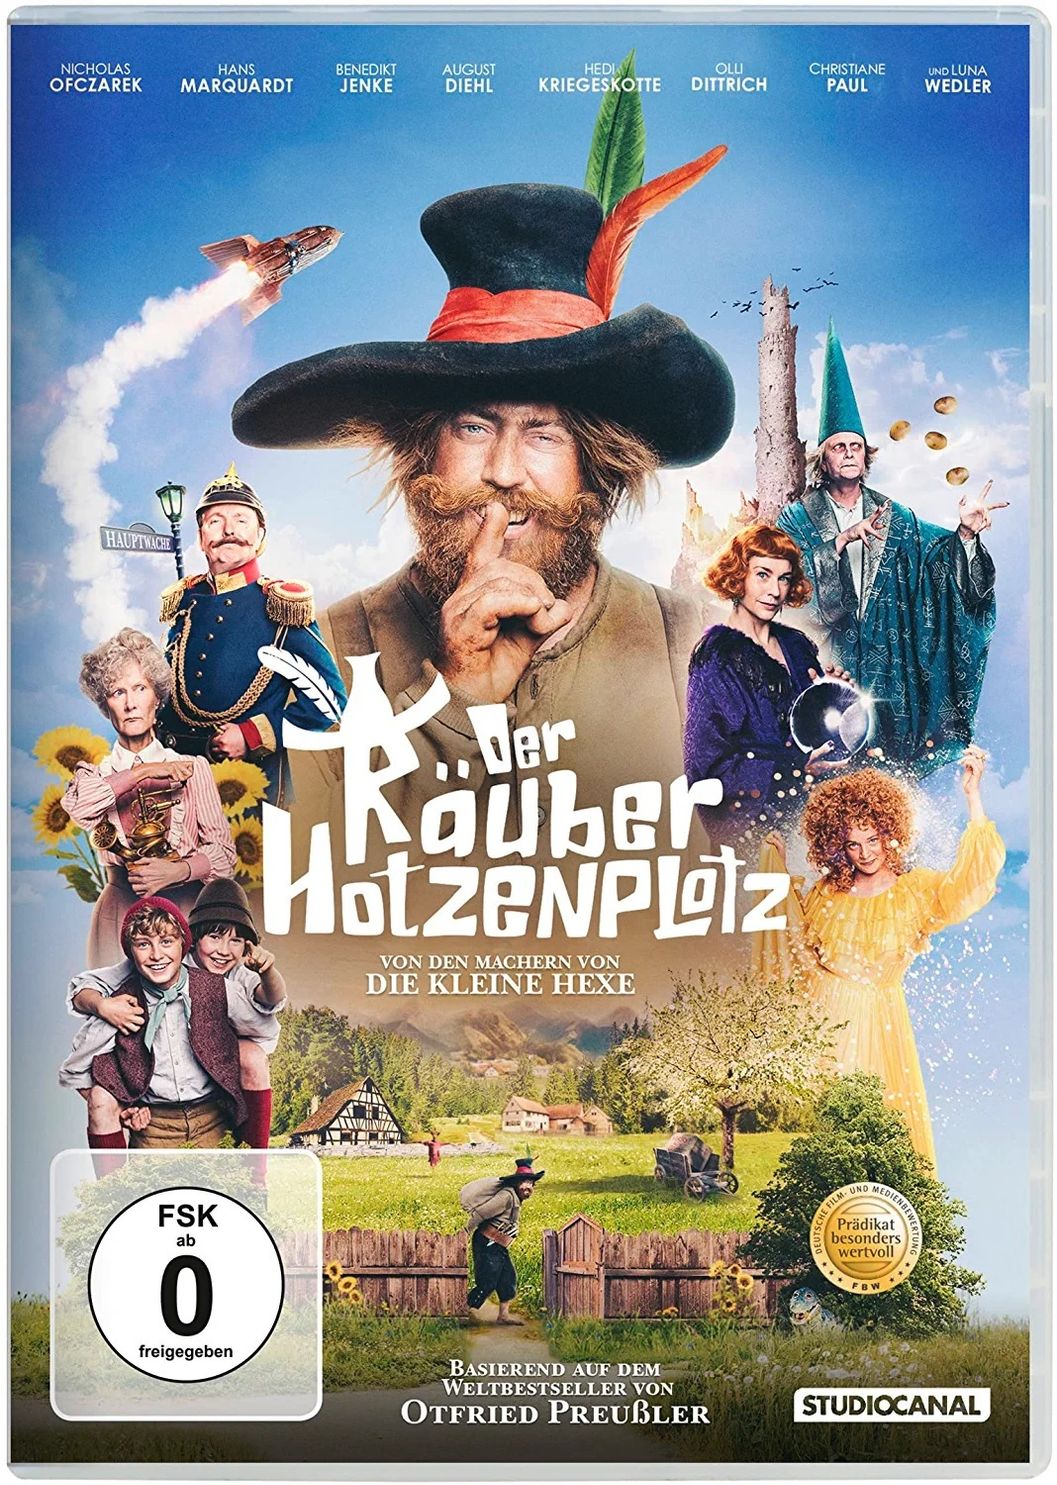 Der Räuber Hotzenplotz 2022 DVD bei Weltbild.at bestellen